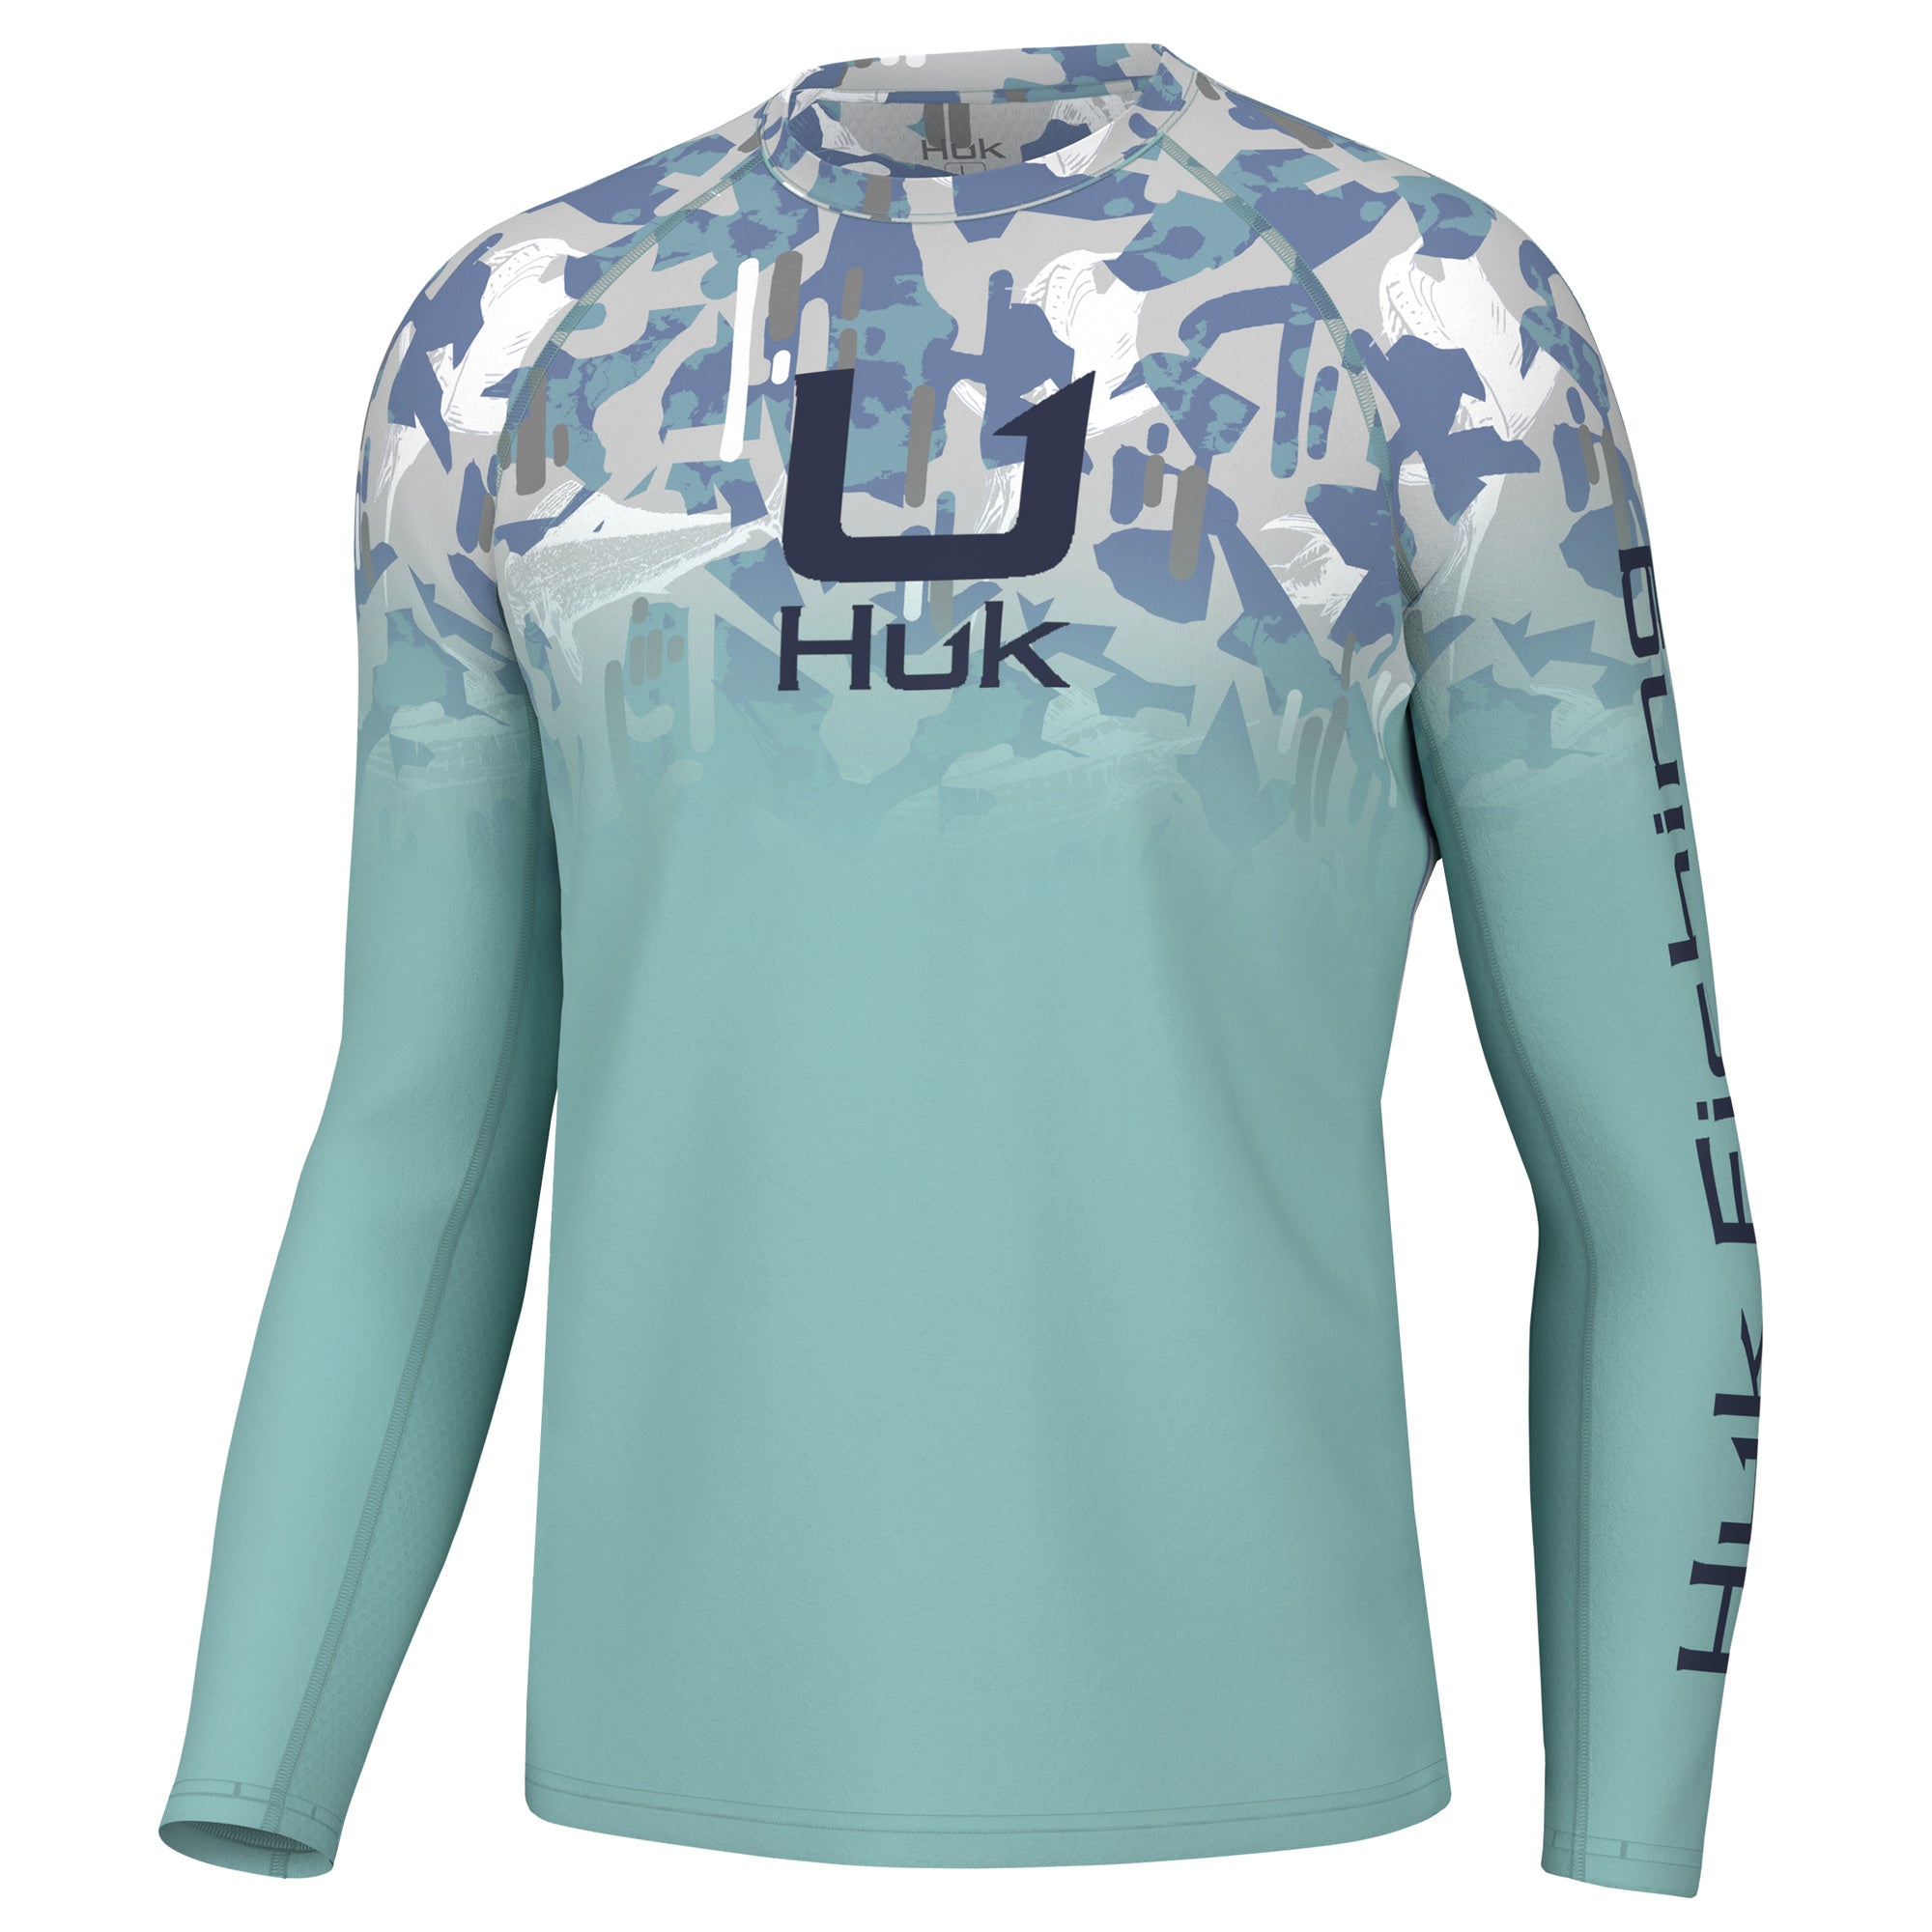 Womens Huk fishing Icon Long Sleeve Shirt, White, SZ XL NEW WITH